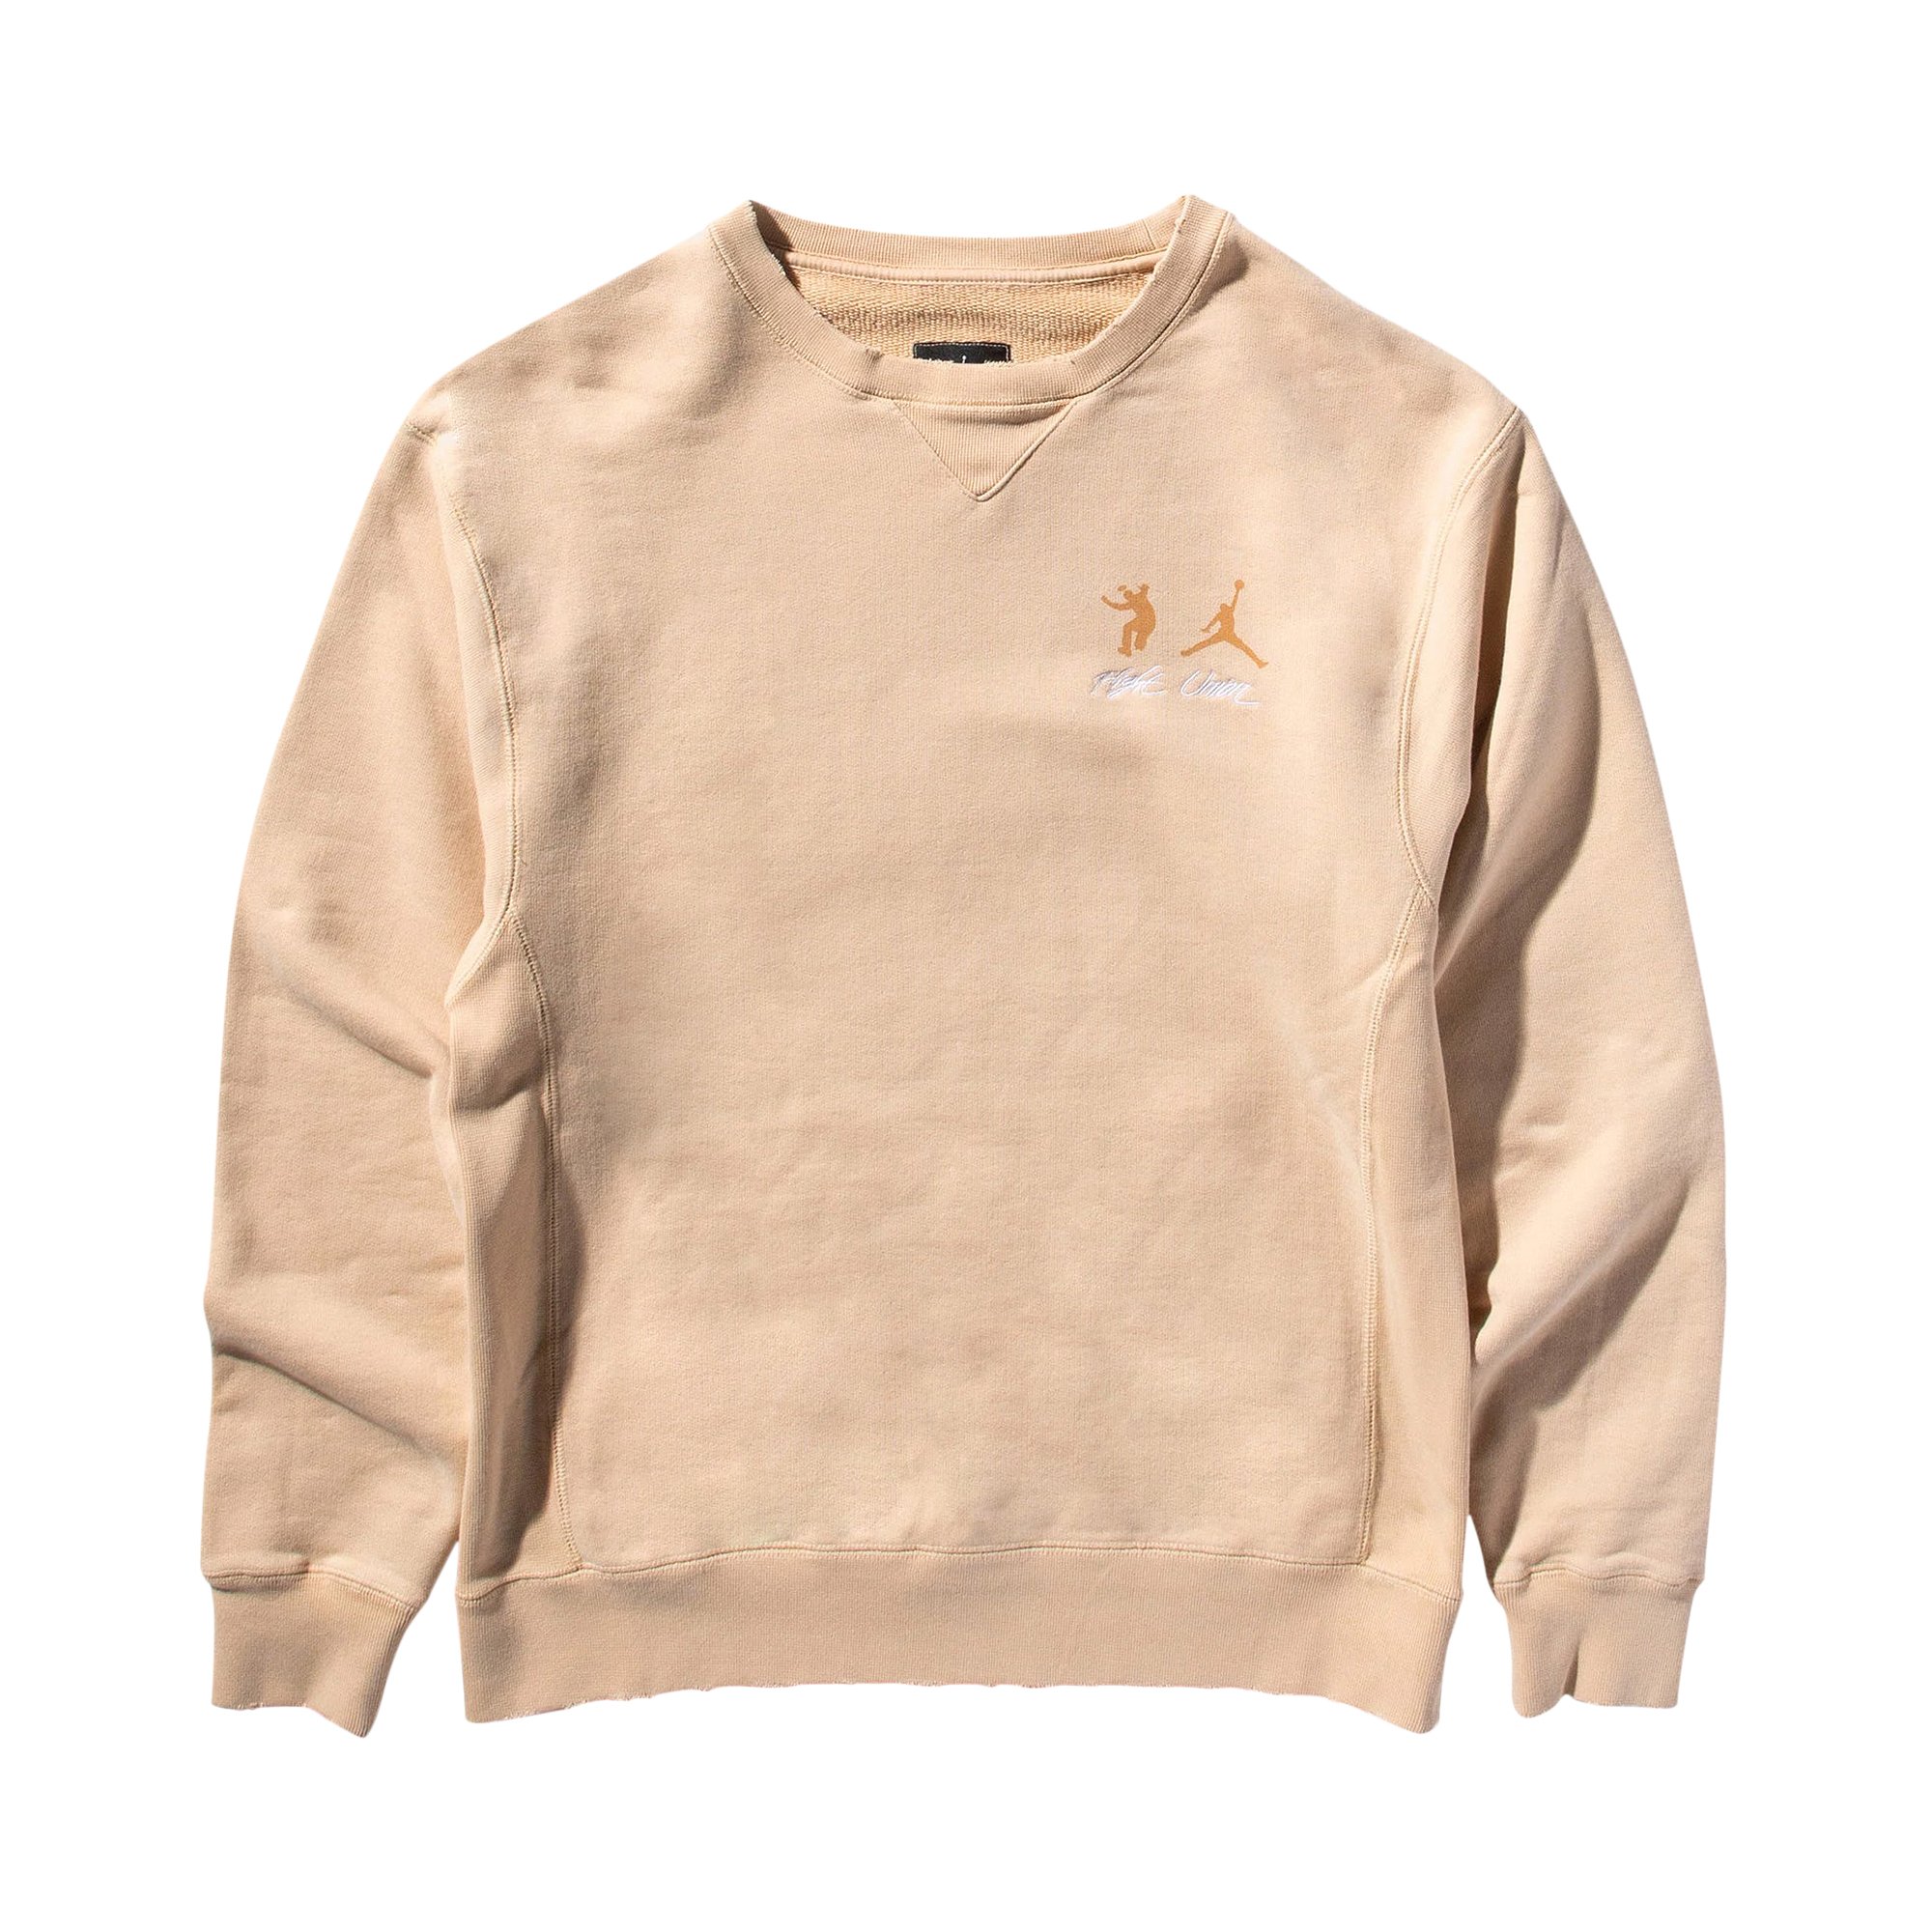 Buy Air Jordan x Union LA Sweatshirt 'White Onyx' - DJ9522 268 | GOAT